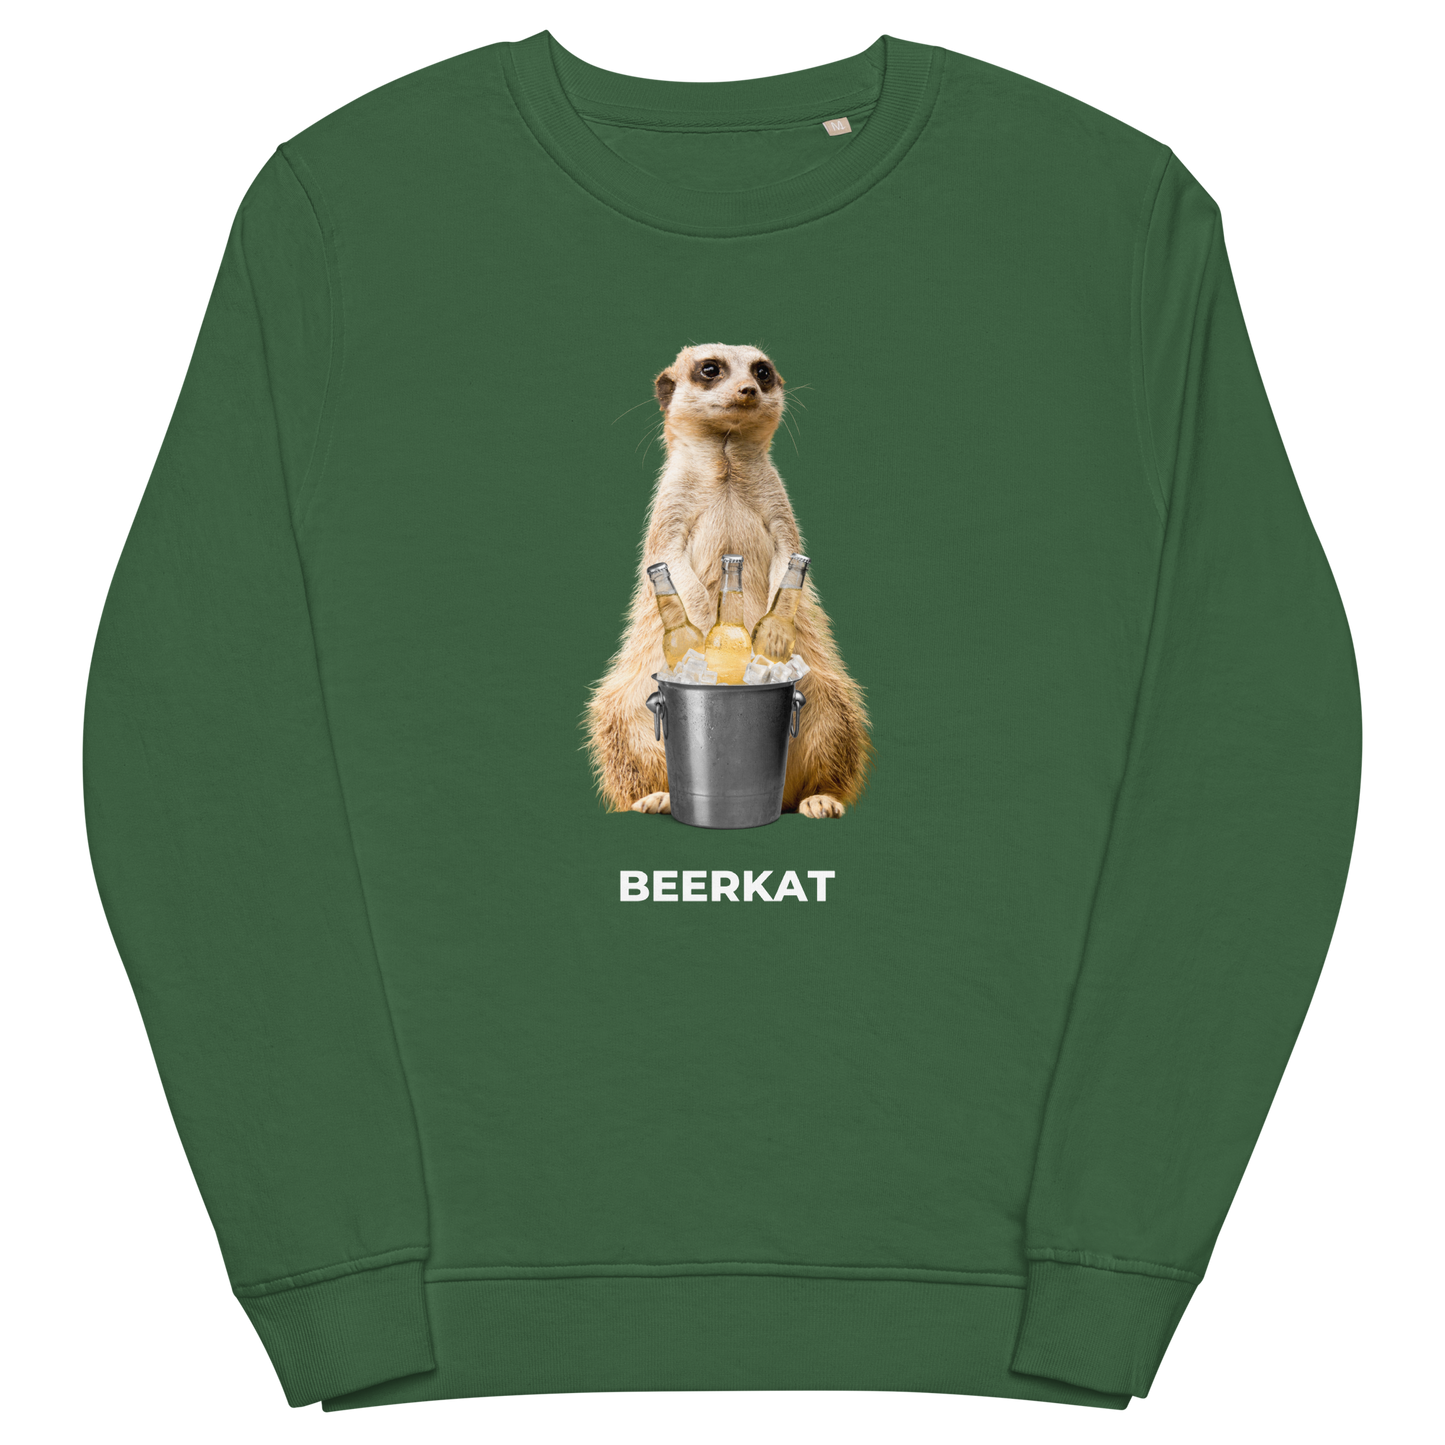 Bottle Green Organic Cotton Meerkat Sweatshirt featuring a hilarious Beerkat graphic on the chest - Funny Graphic Meerkat Sweatshirts - Boozy Fox